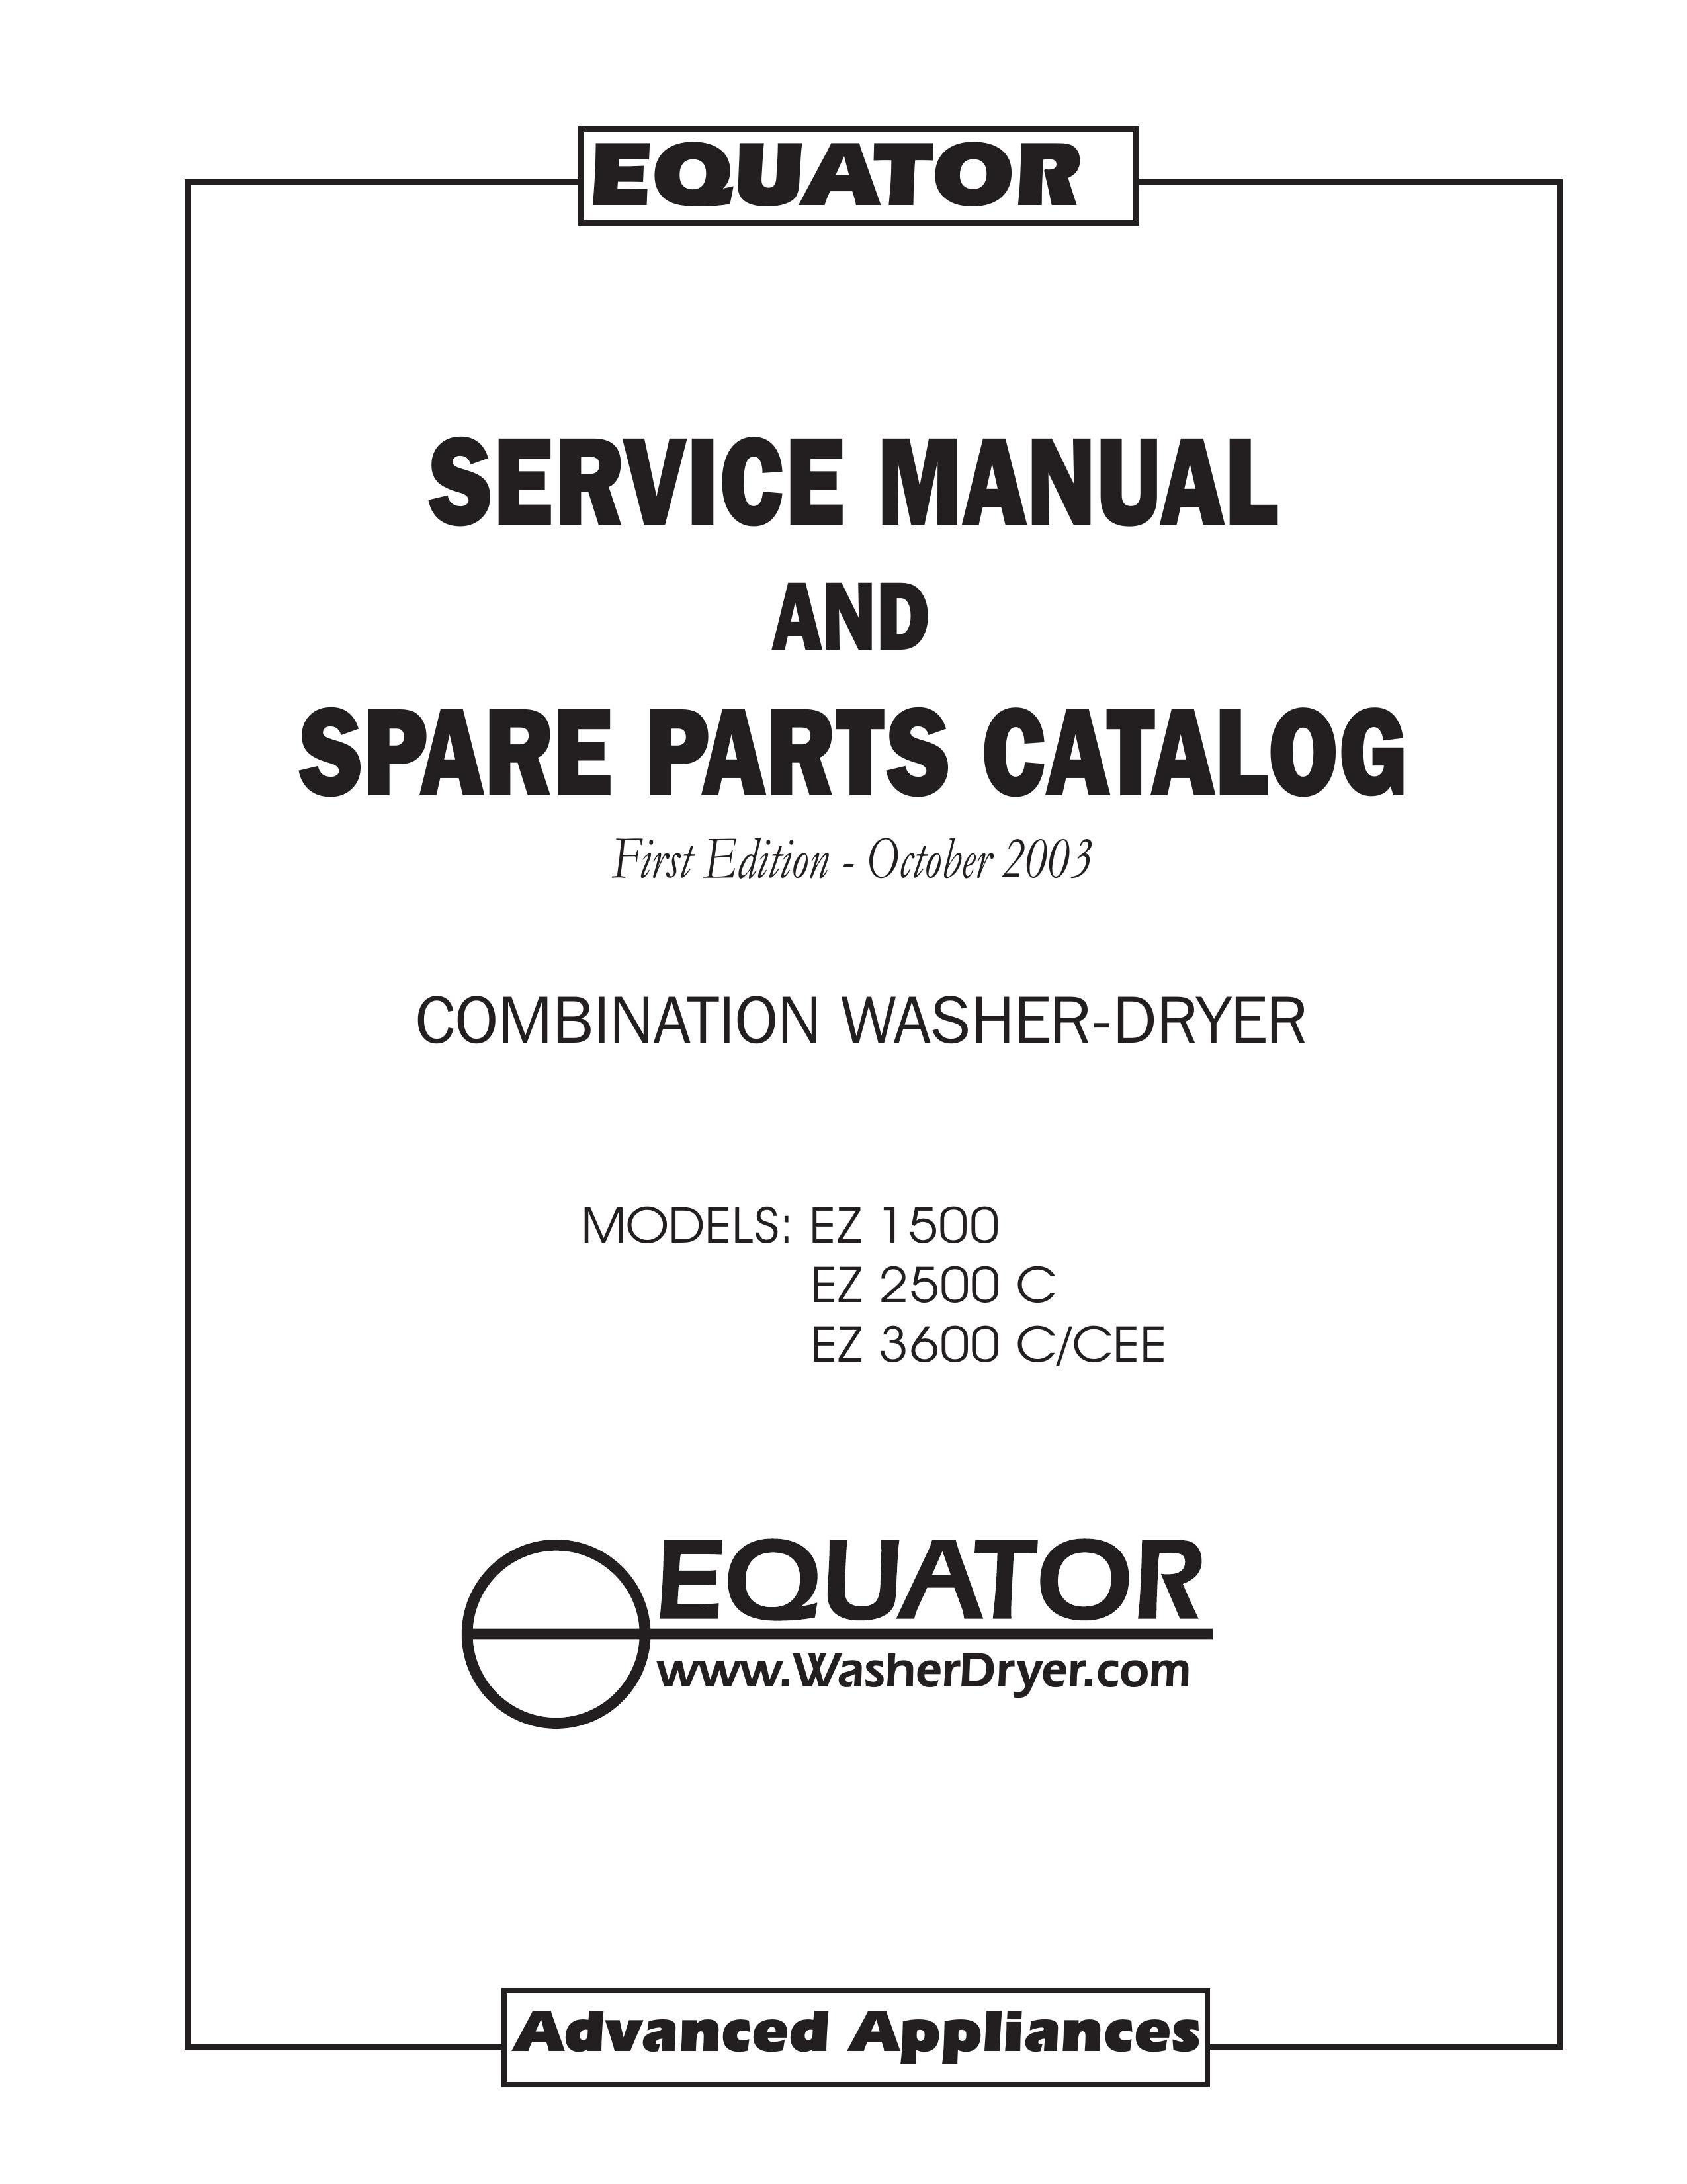 Equator EZ 1500 Washer/Dryer User Manual